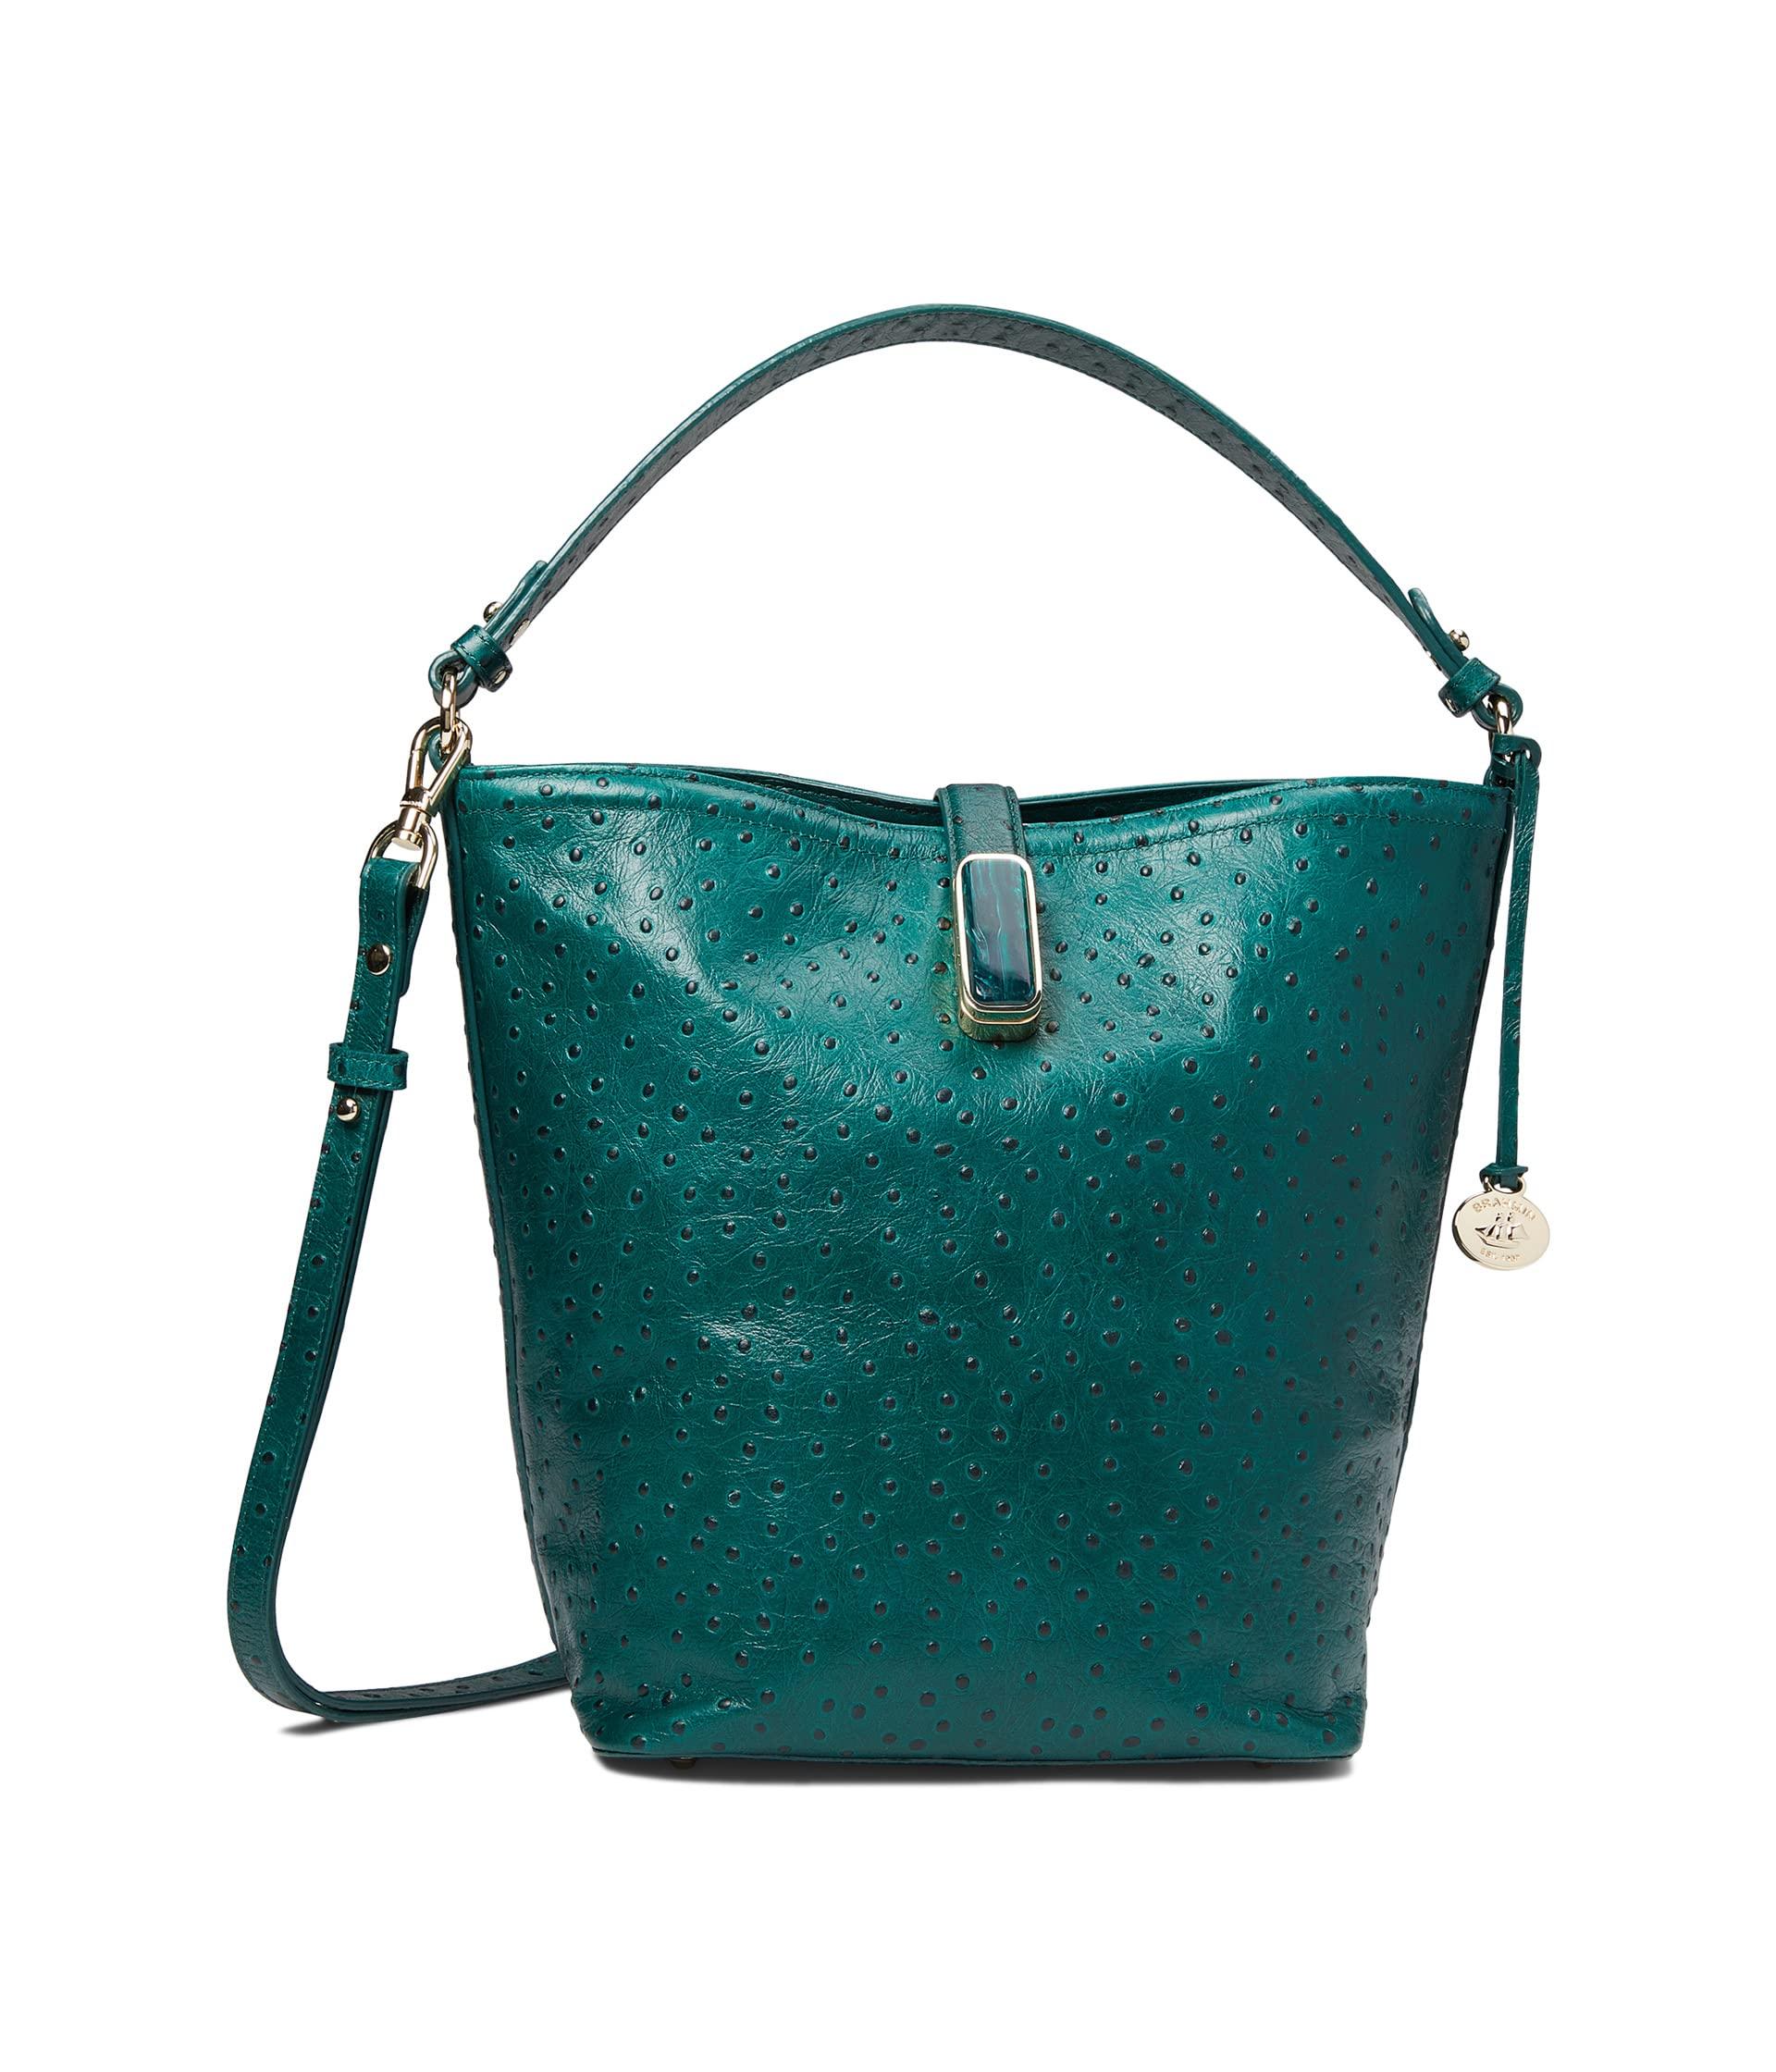 Green bag  Bags, Brahmin handbags, Fashion bags